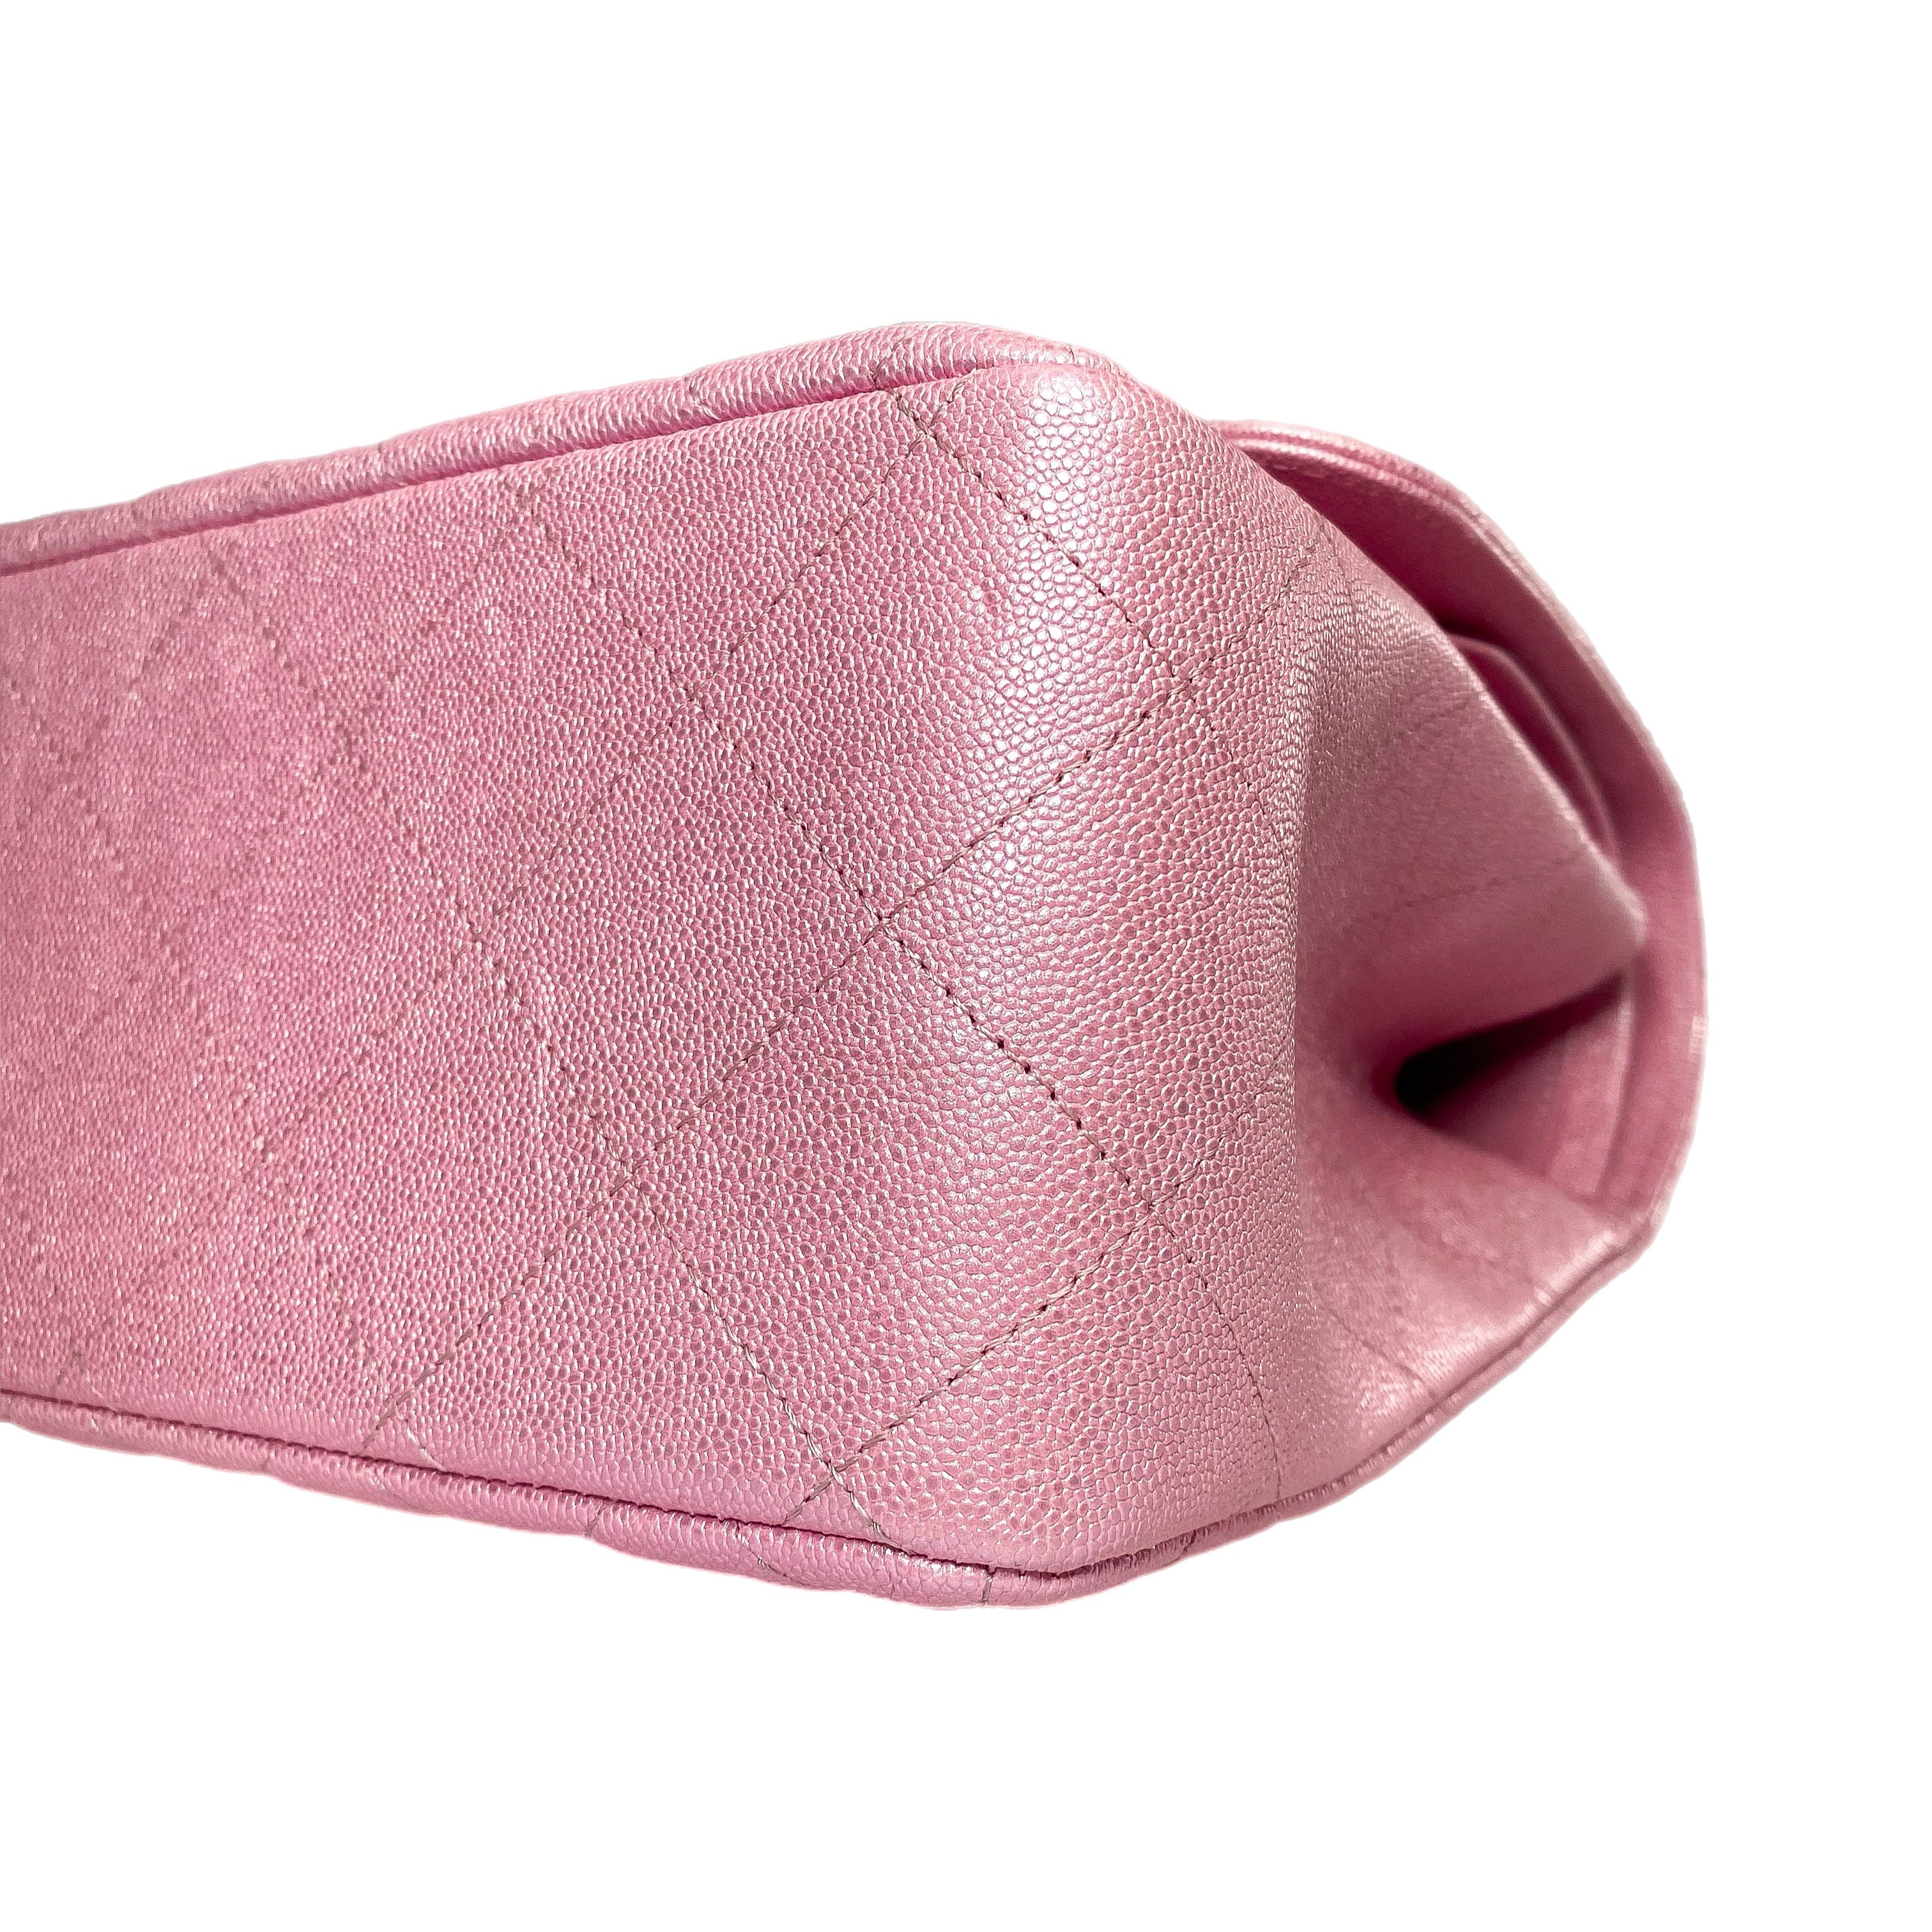 Chanel Iridescent Rose Pink Jumbo Double Flap Bag